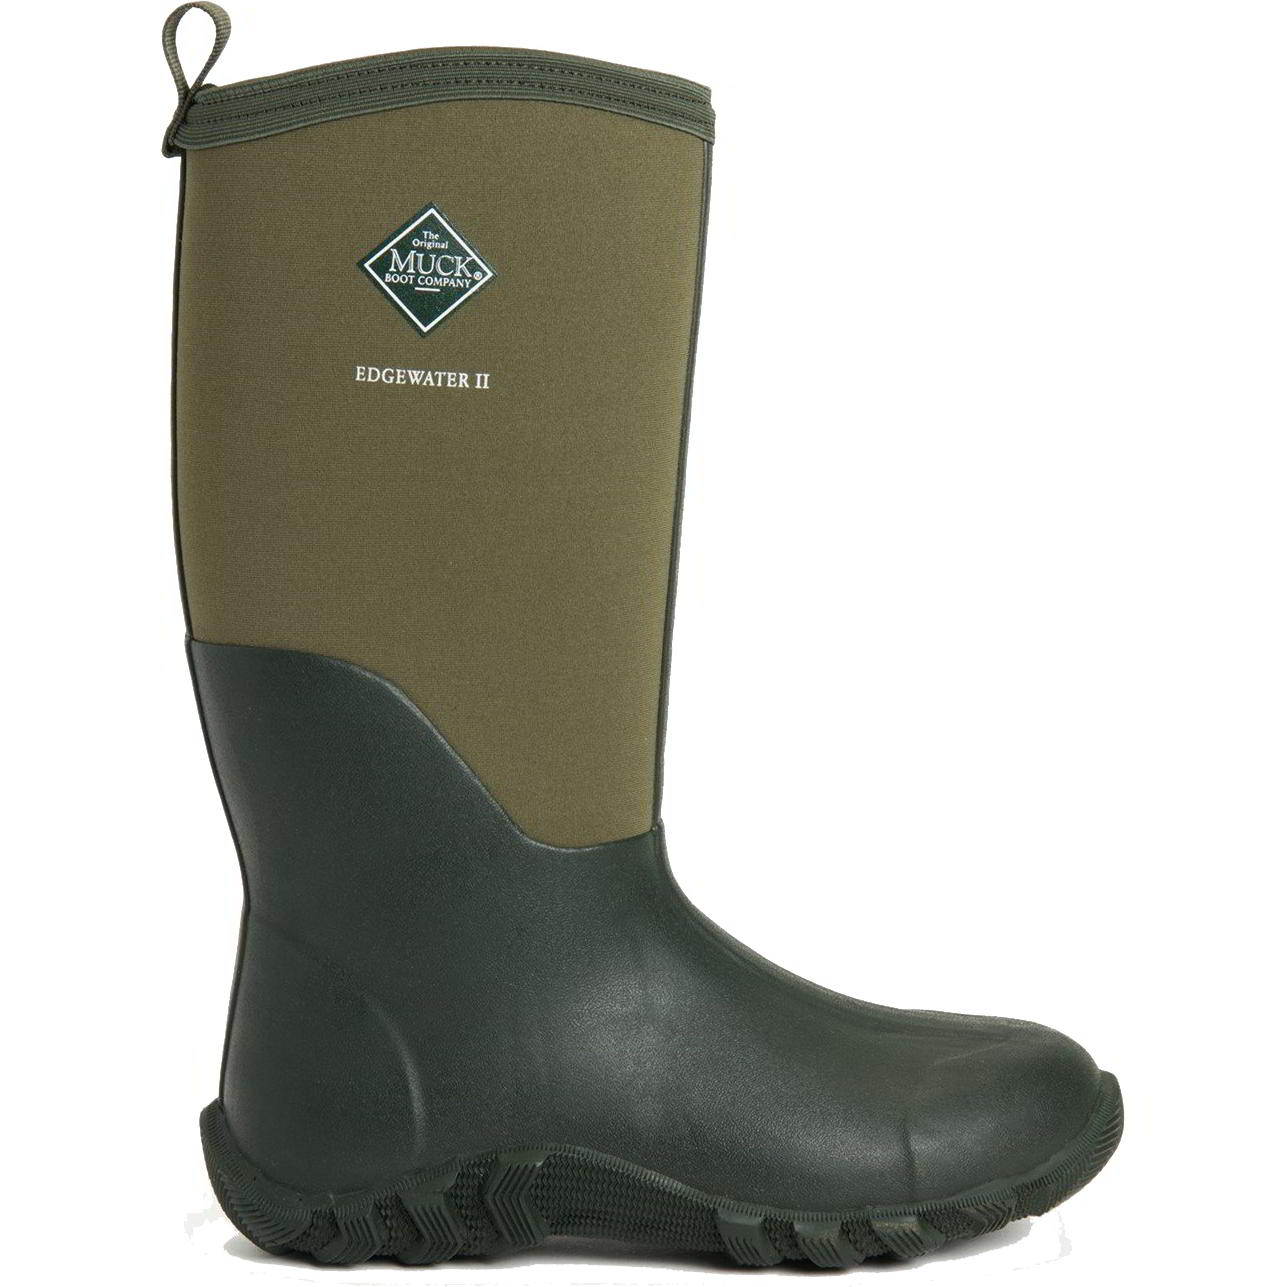 Muck Boots Men's Edgewater II Neoprene Wellies Rain Boots - UK 11